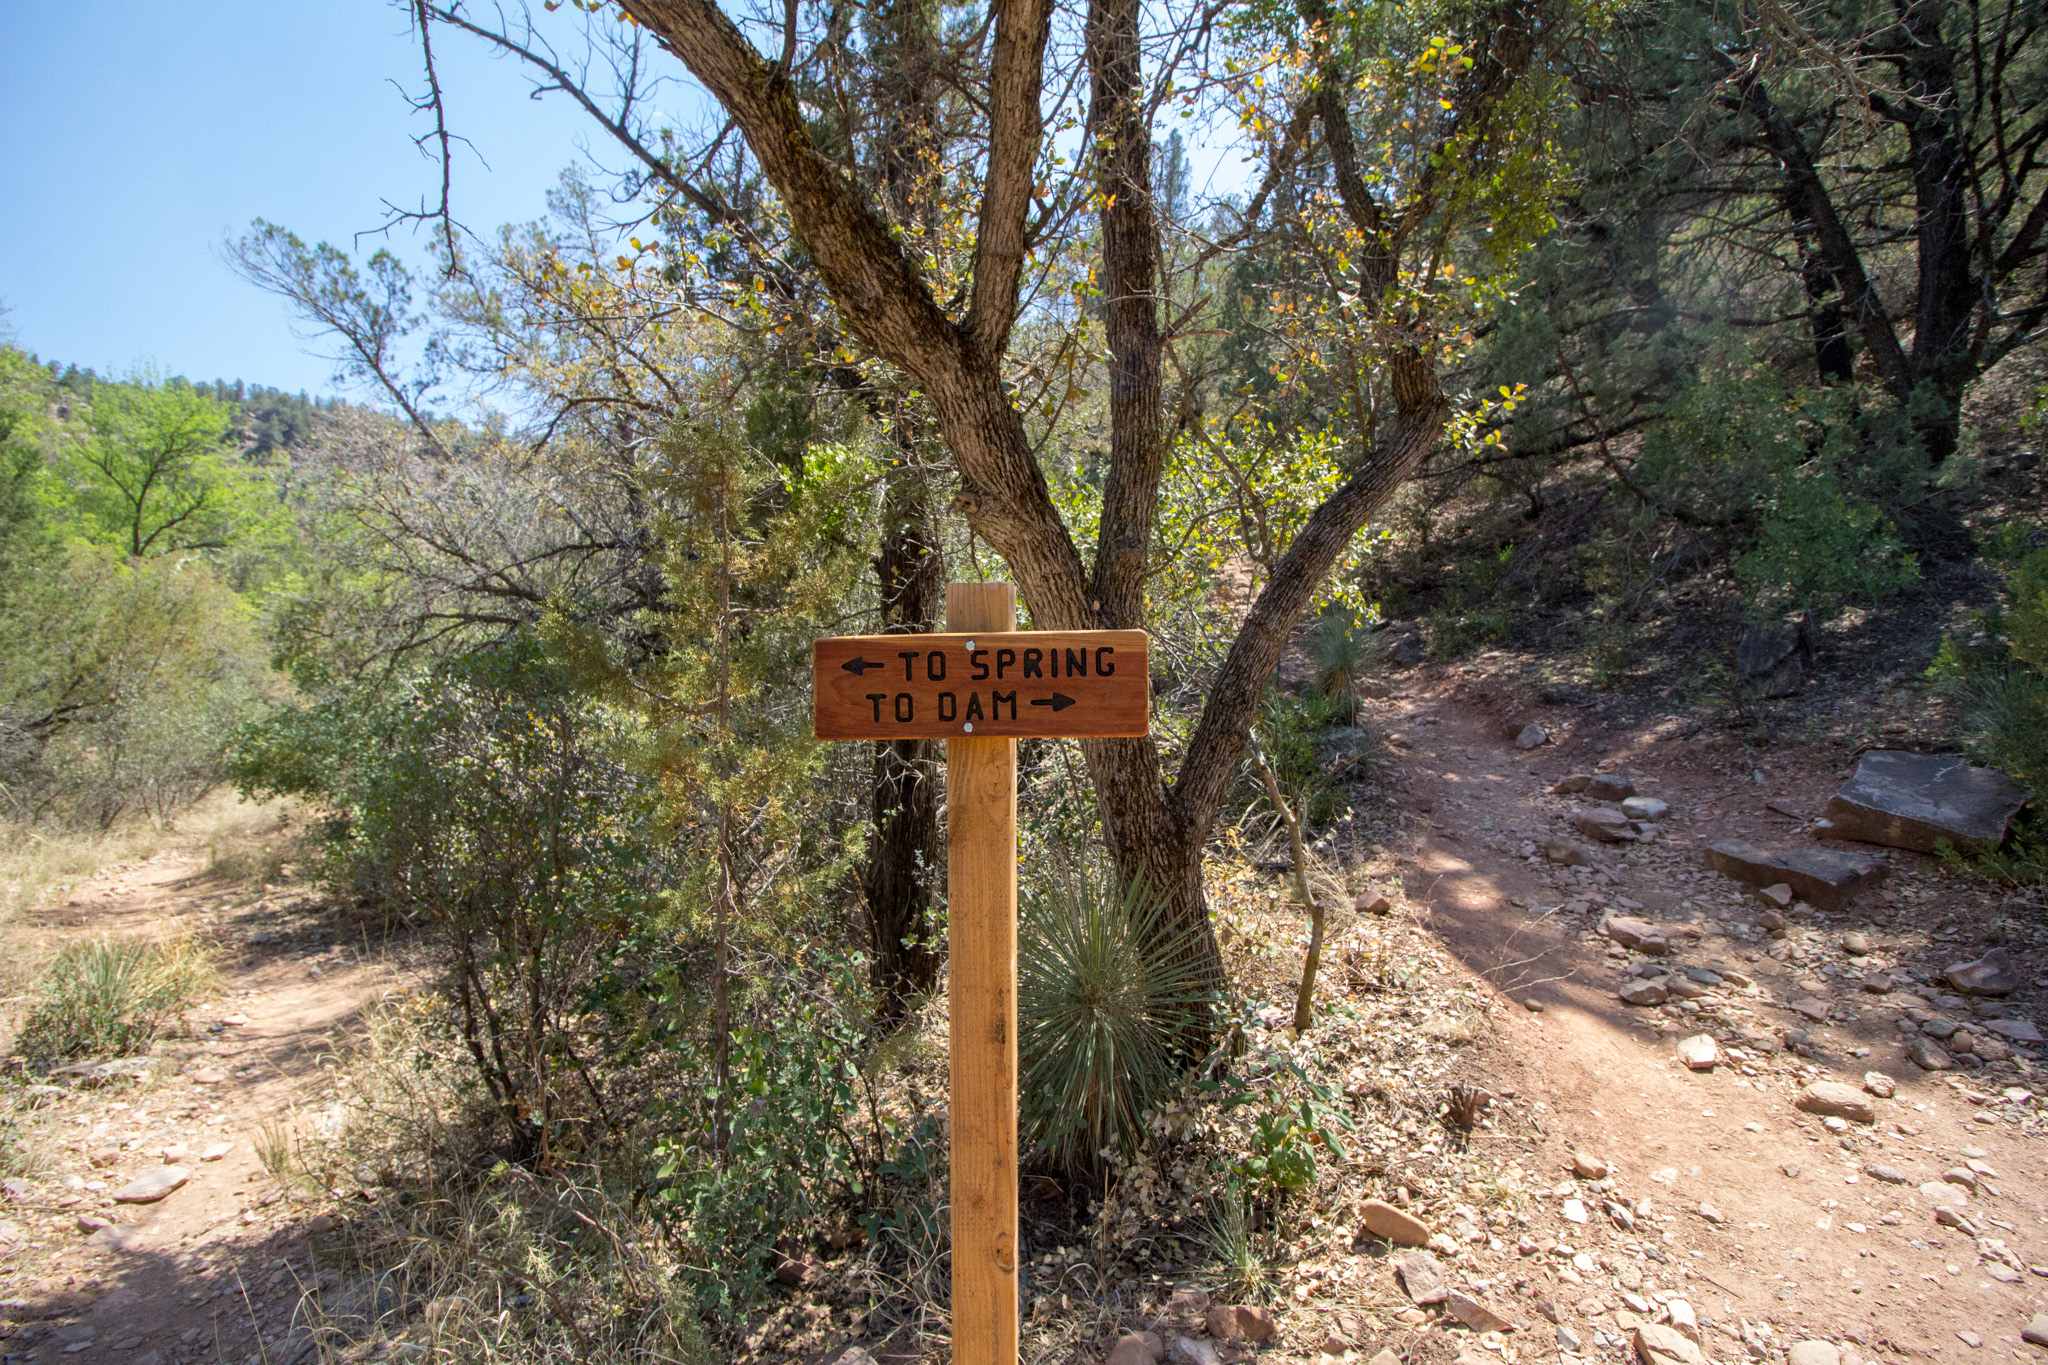 Hike Fossil Creek Strawberry Arizona Hikers Guide